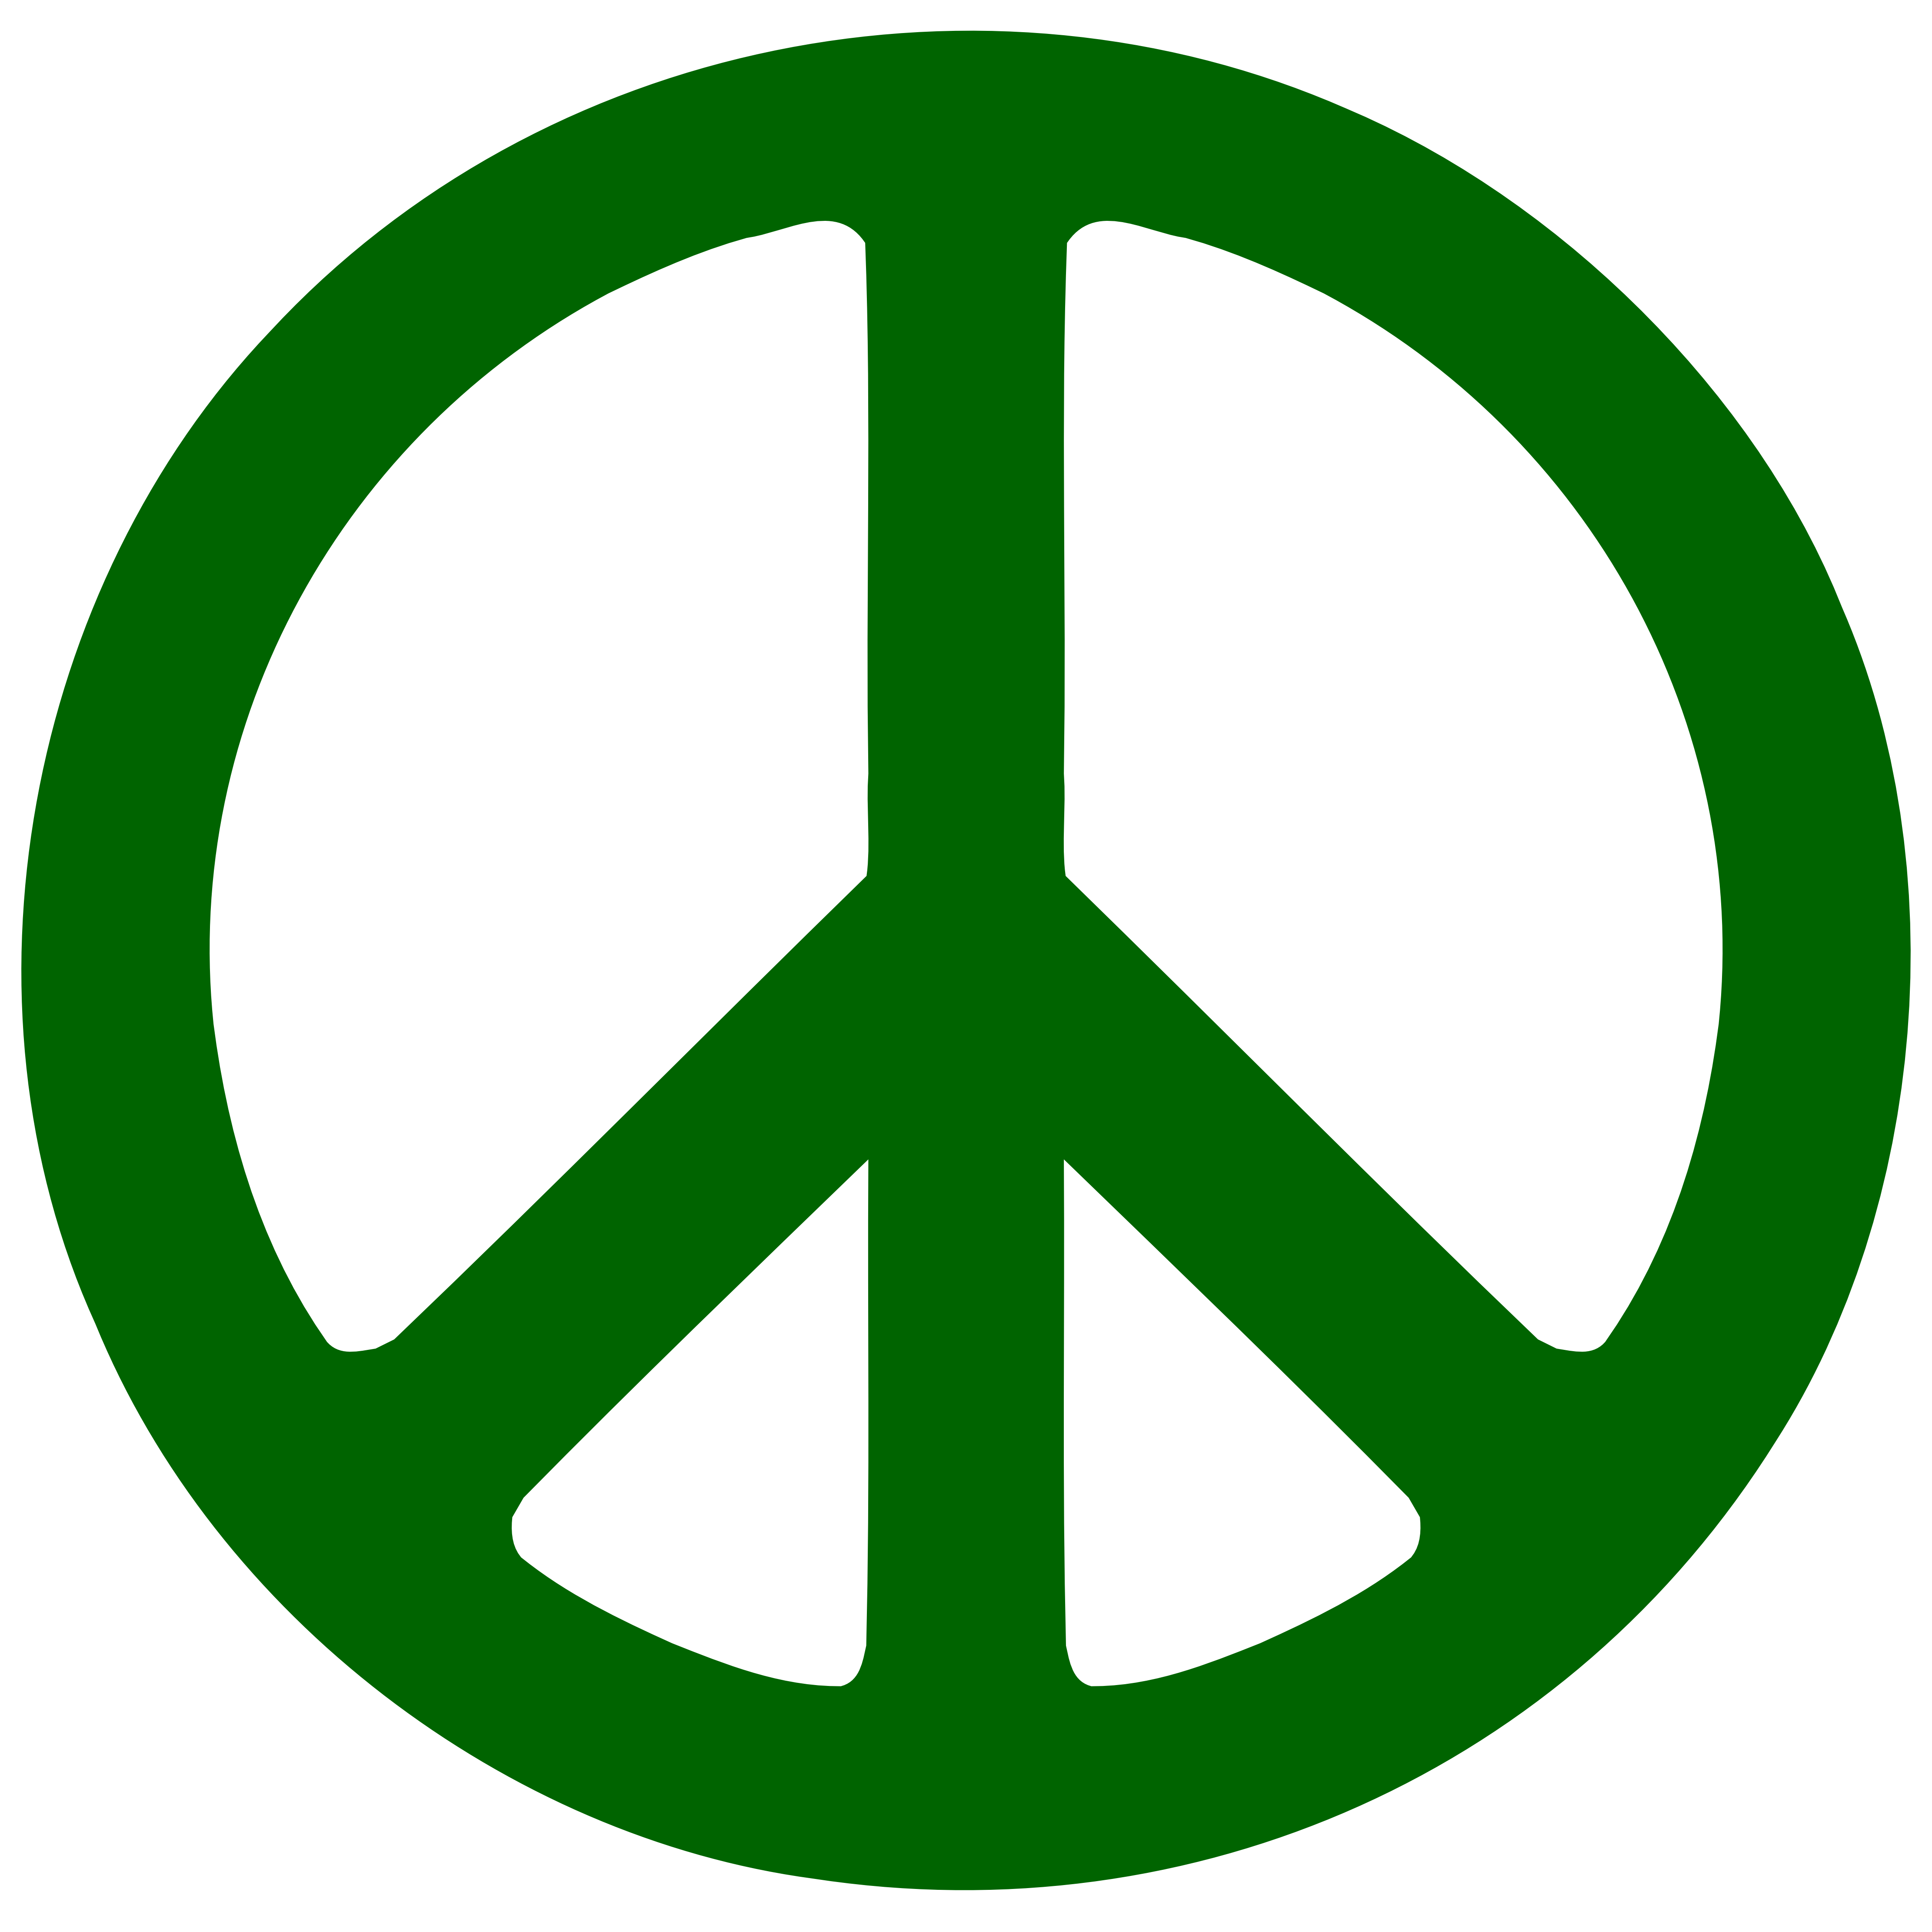 Green Peace Logo - ClipArt Best